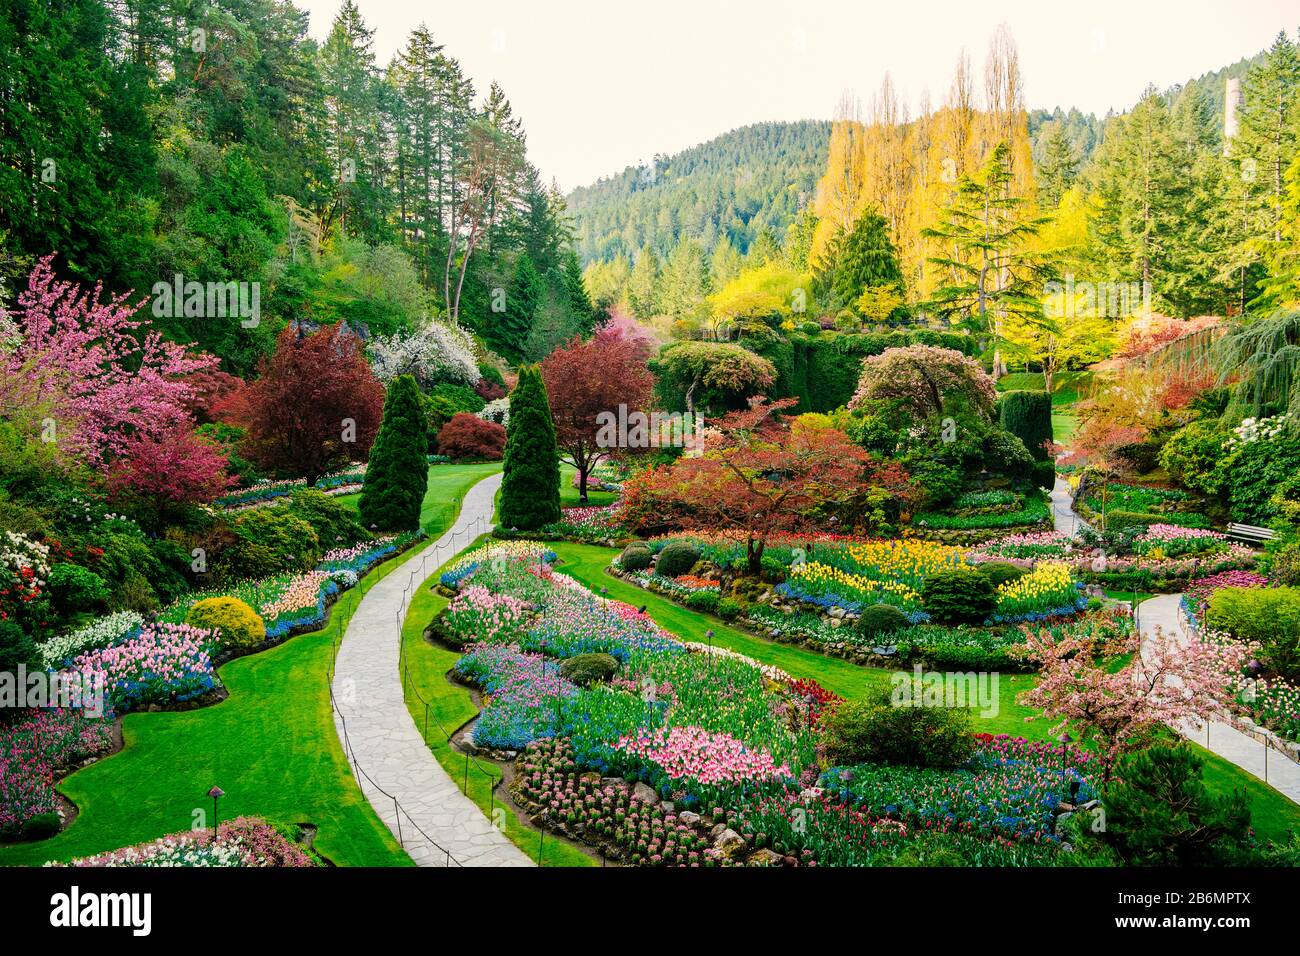 Blick auf die Pfade im Garten, Butchart Gardens, Vancouver Island, British Columbia, Kanada Stockfoto